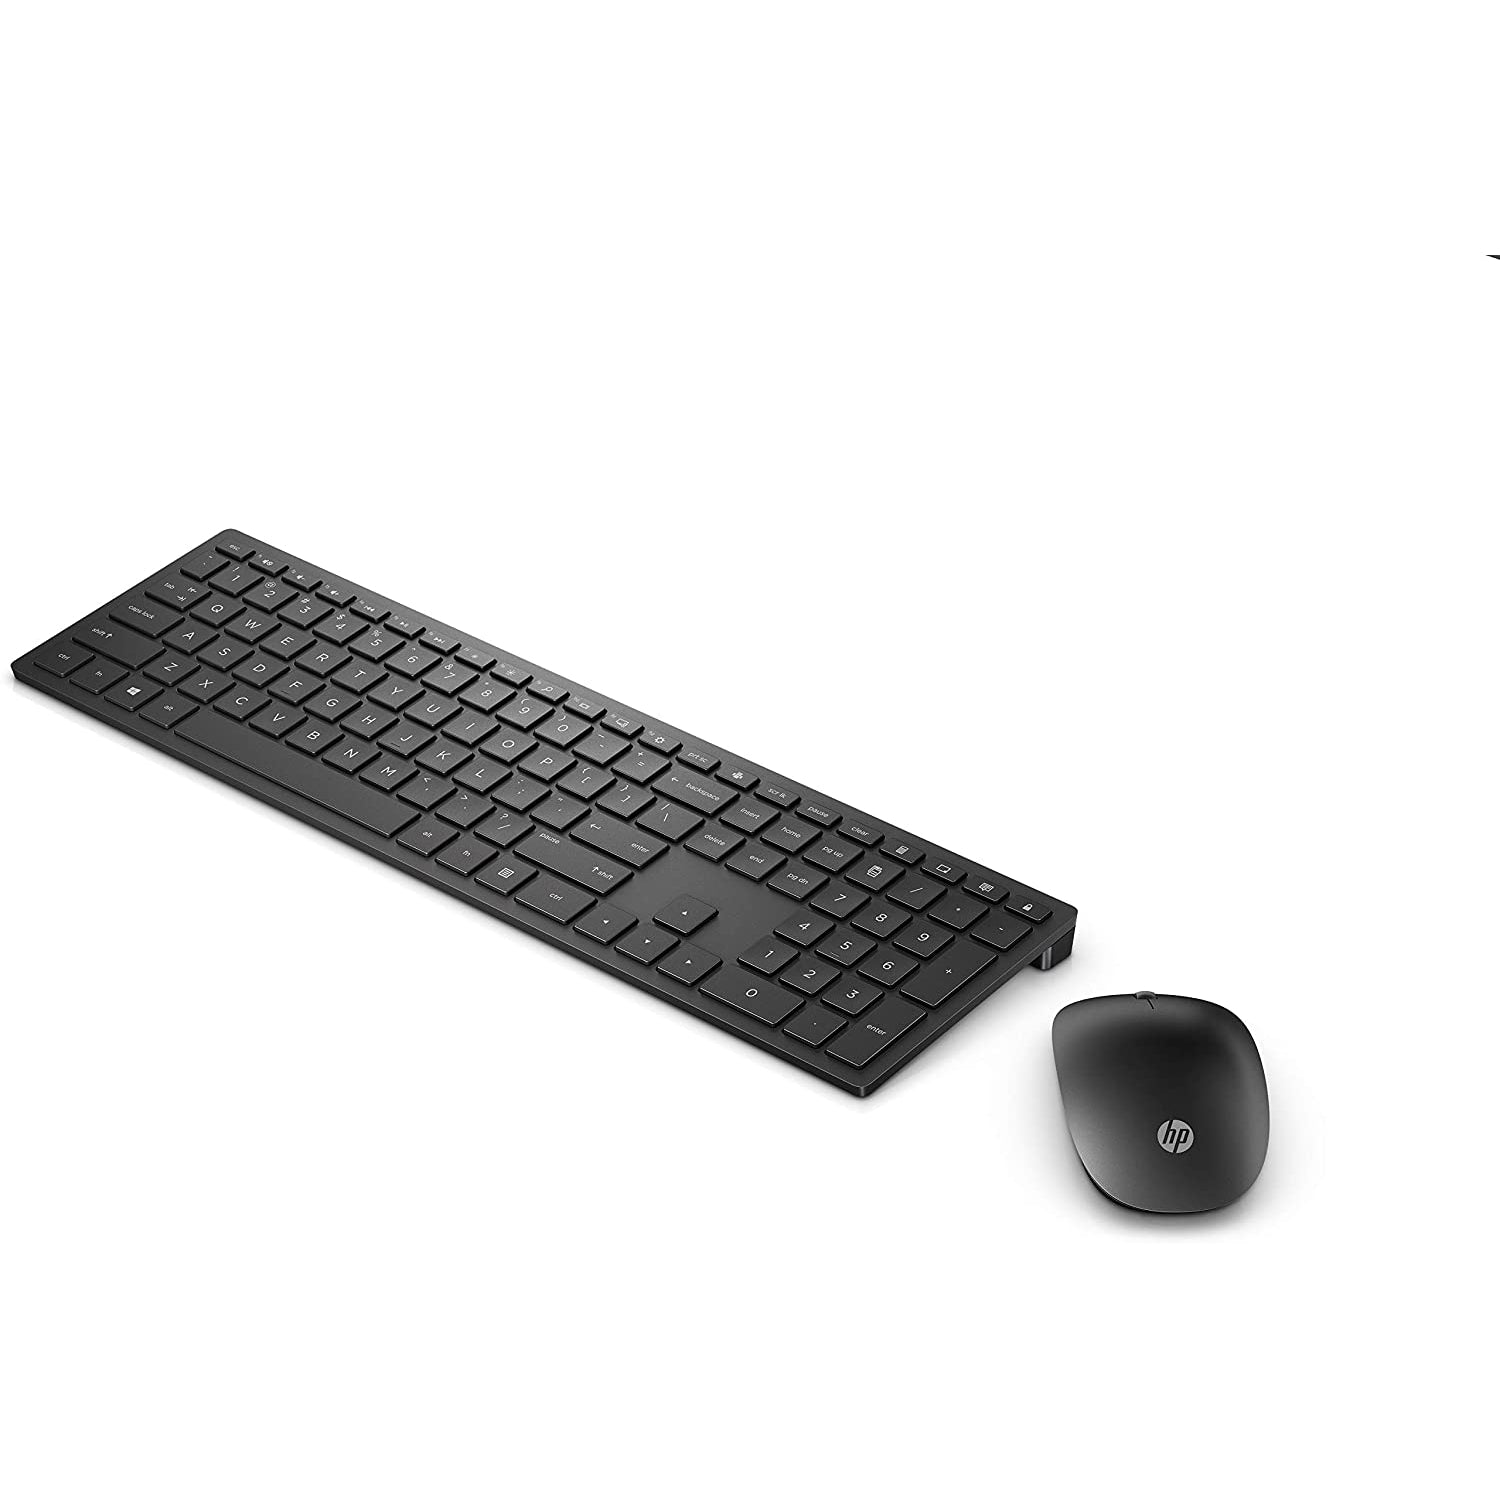 HP Pavilion Combo 800 Wireless Keyboard and Mouse [UK Layout], Black